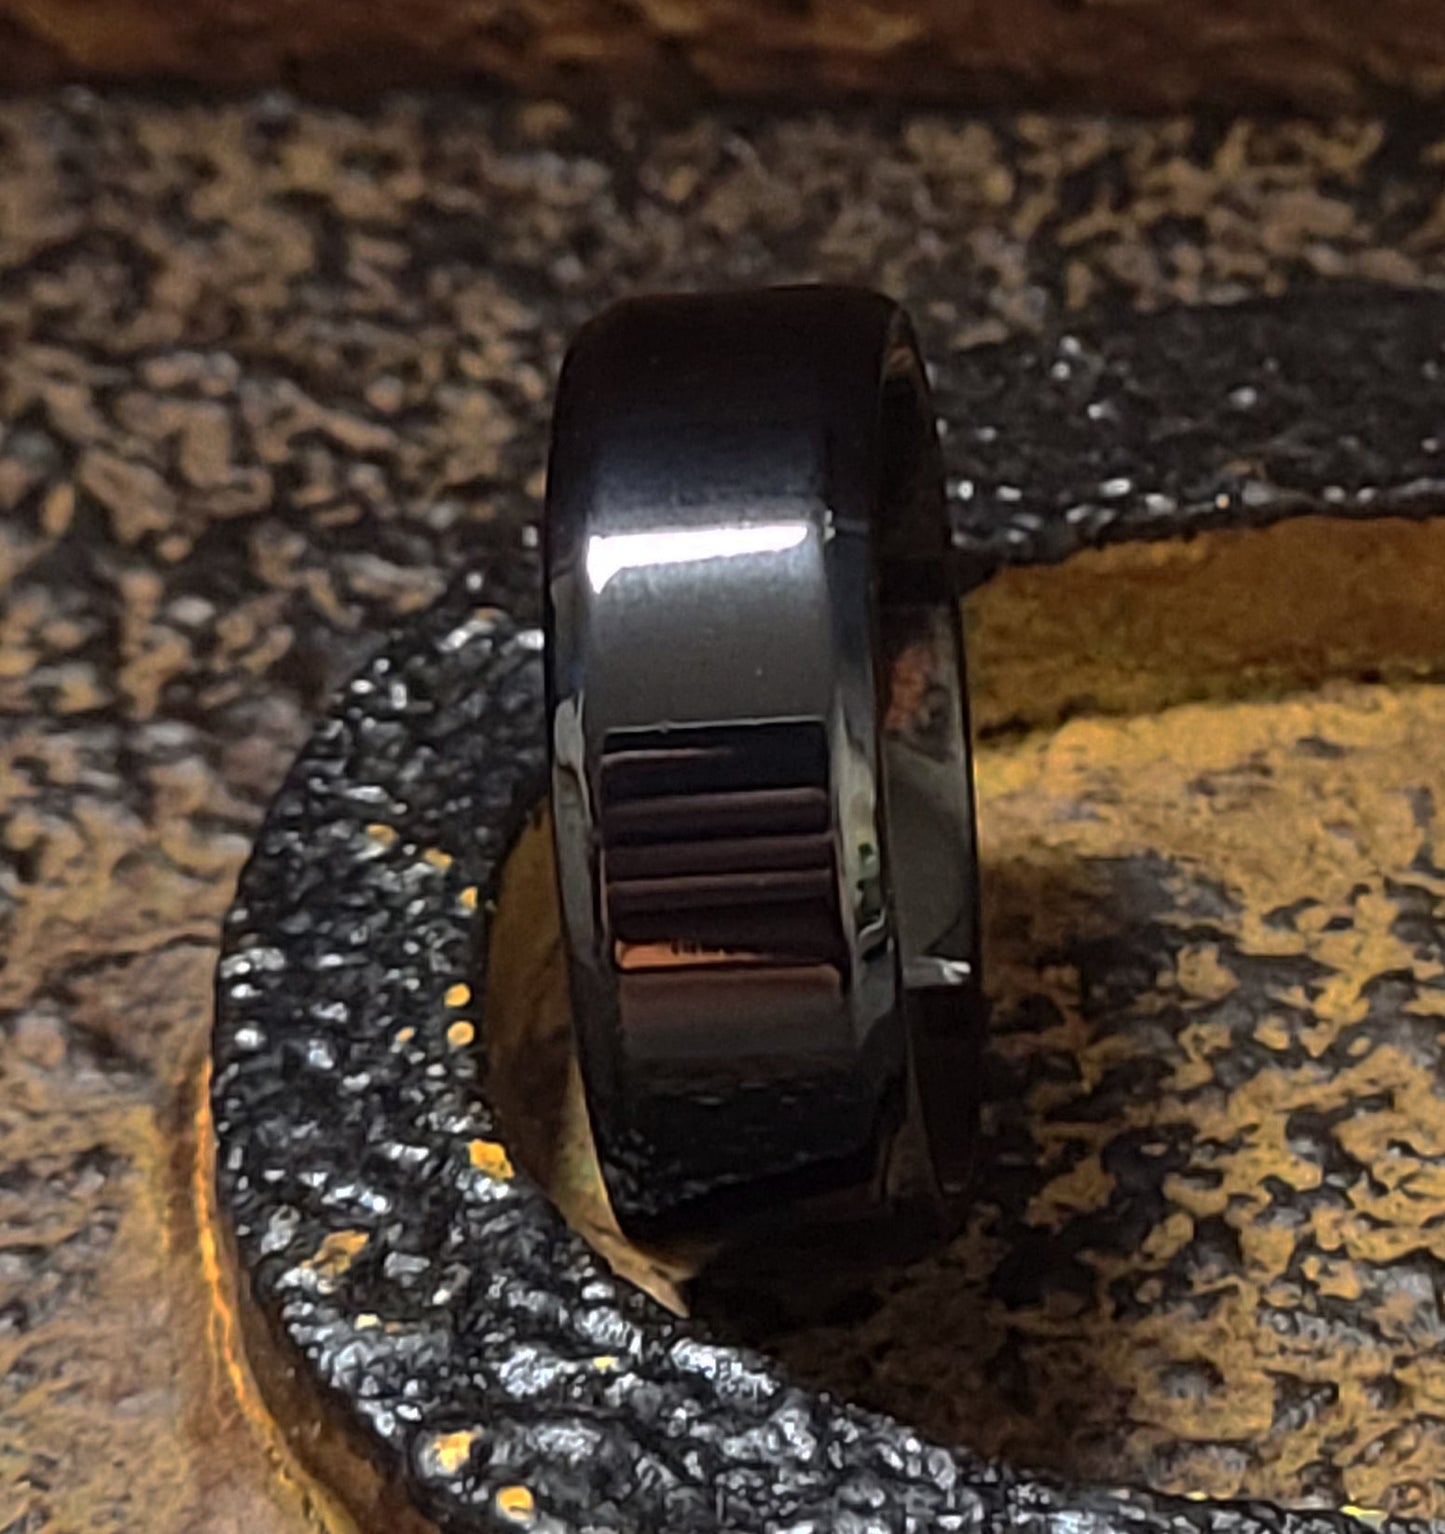 Think Engraved wedding Ring Personalized Men's Traditional Black Wedding Ring - Engraved Handwriting Ring